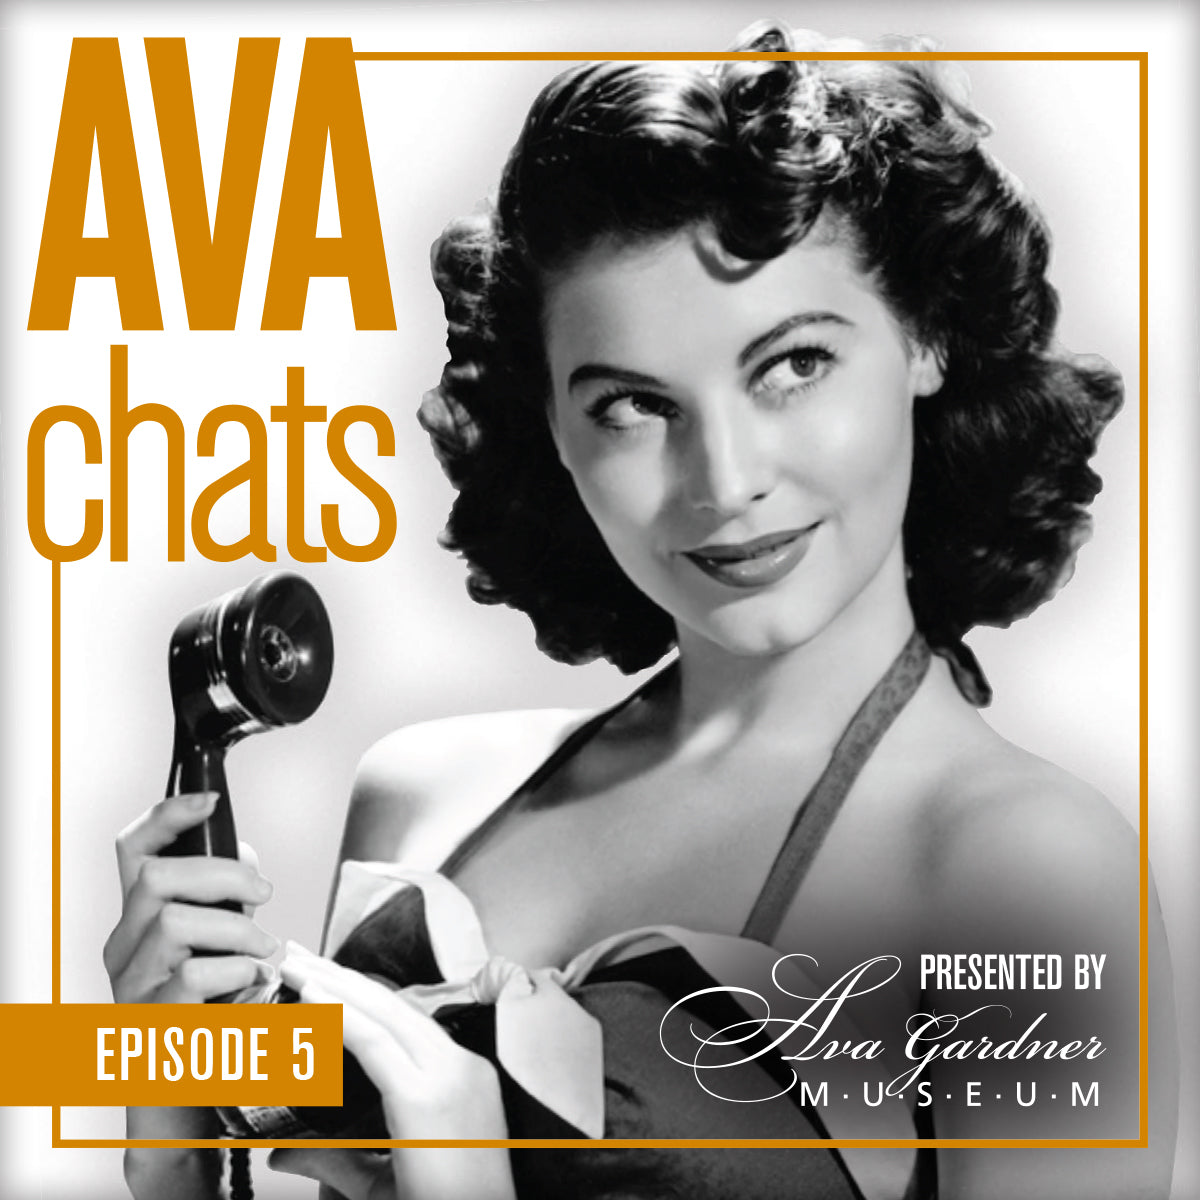 Ava Chats: Ava Gardner Select Bourbon Whiskey's Second Release